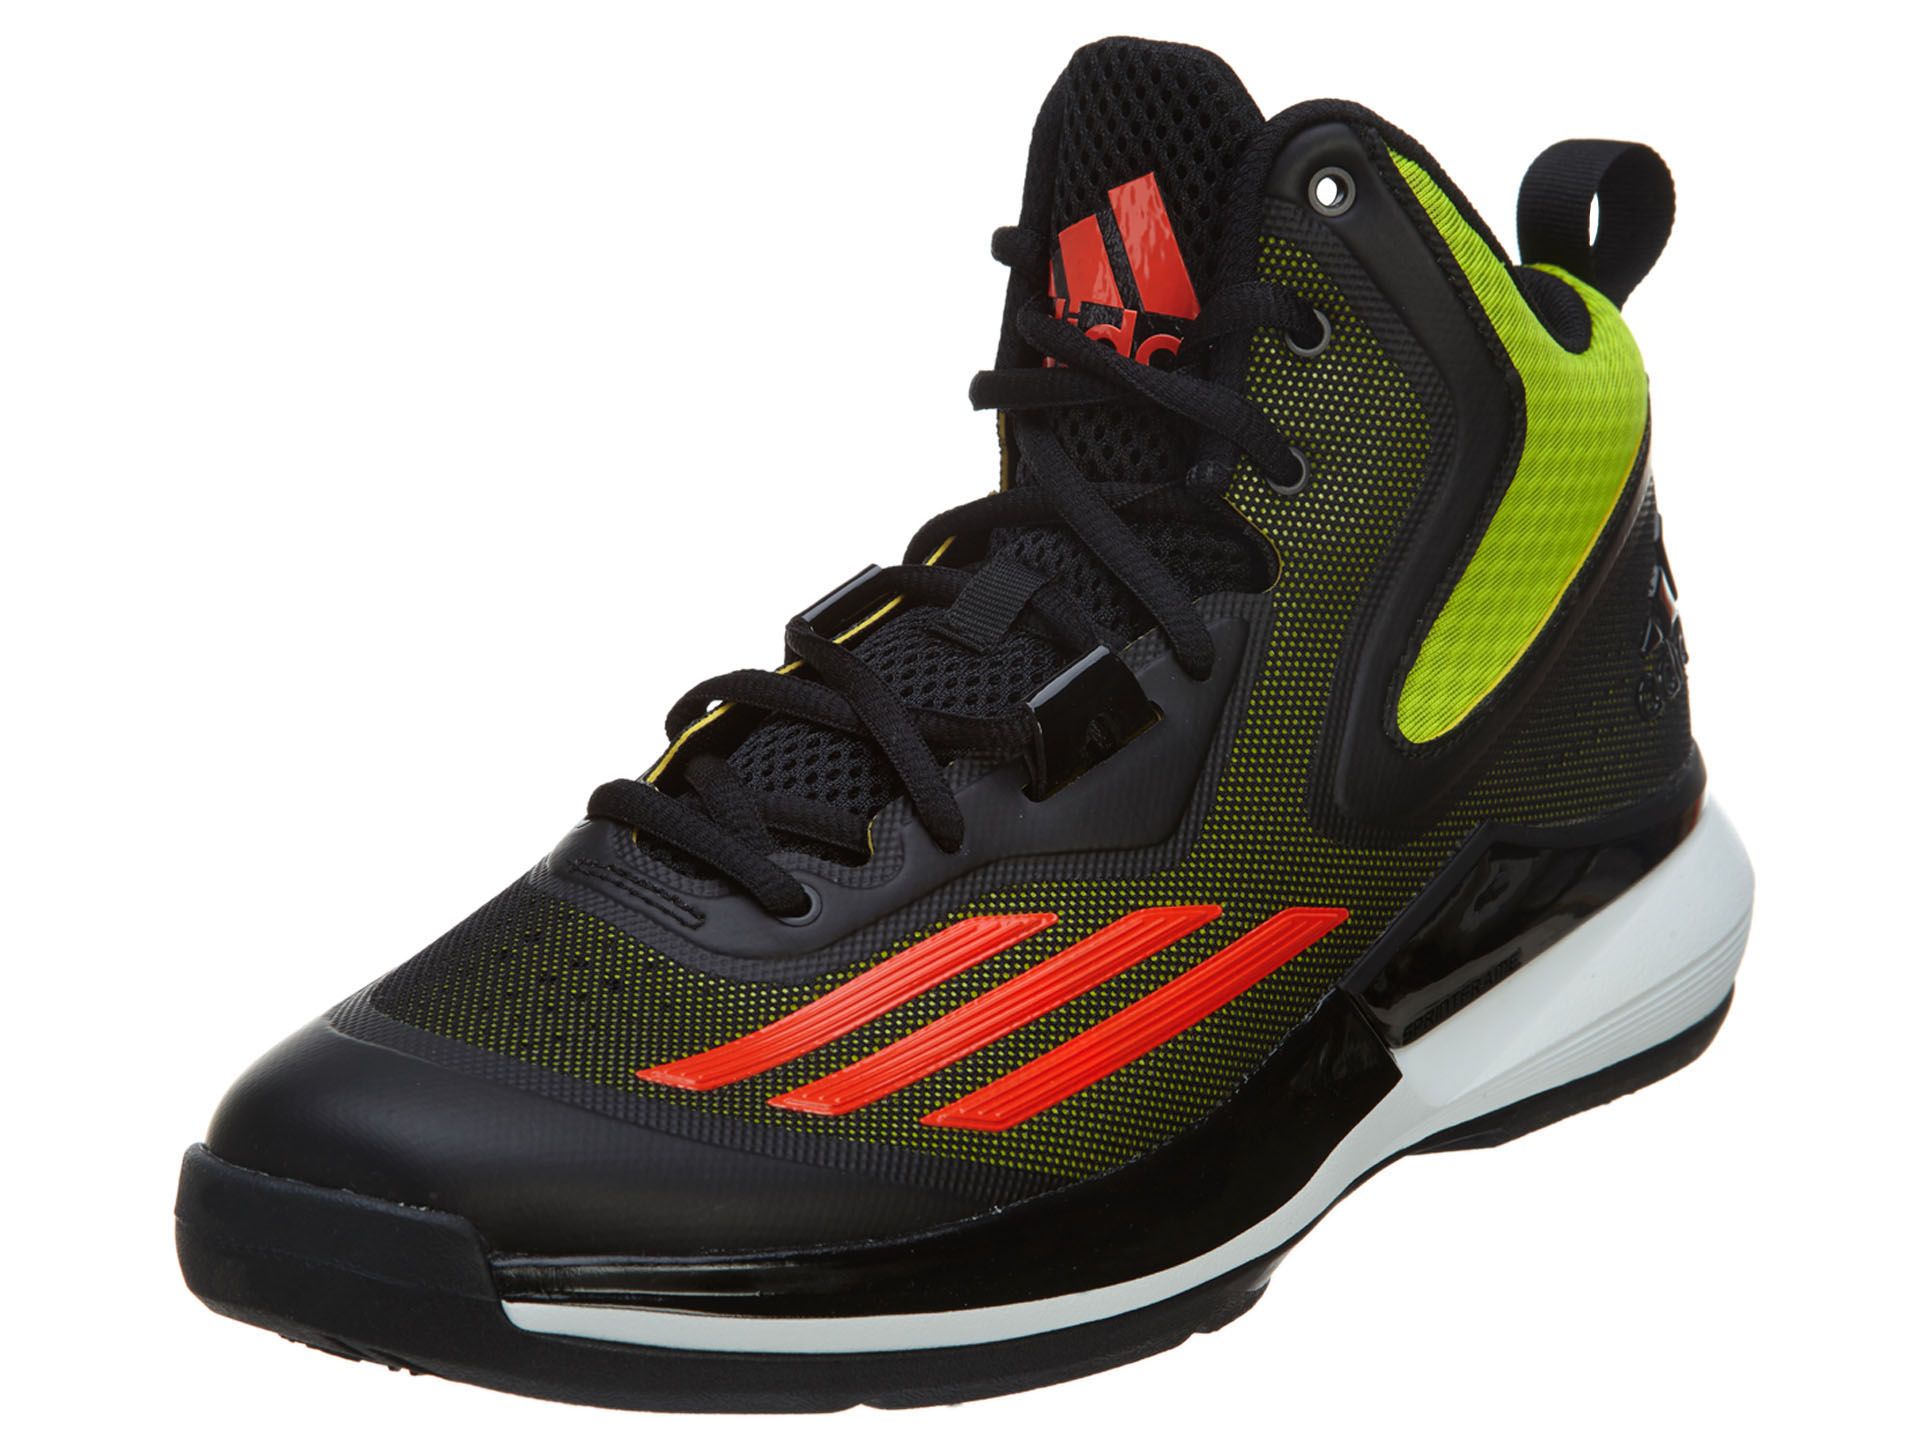 adidas men's title run basketball shoes